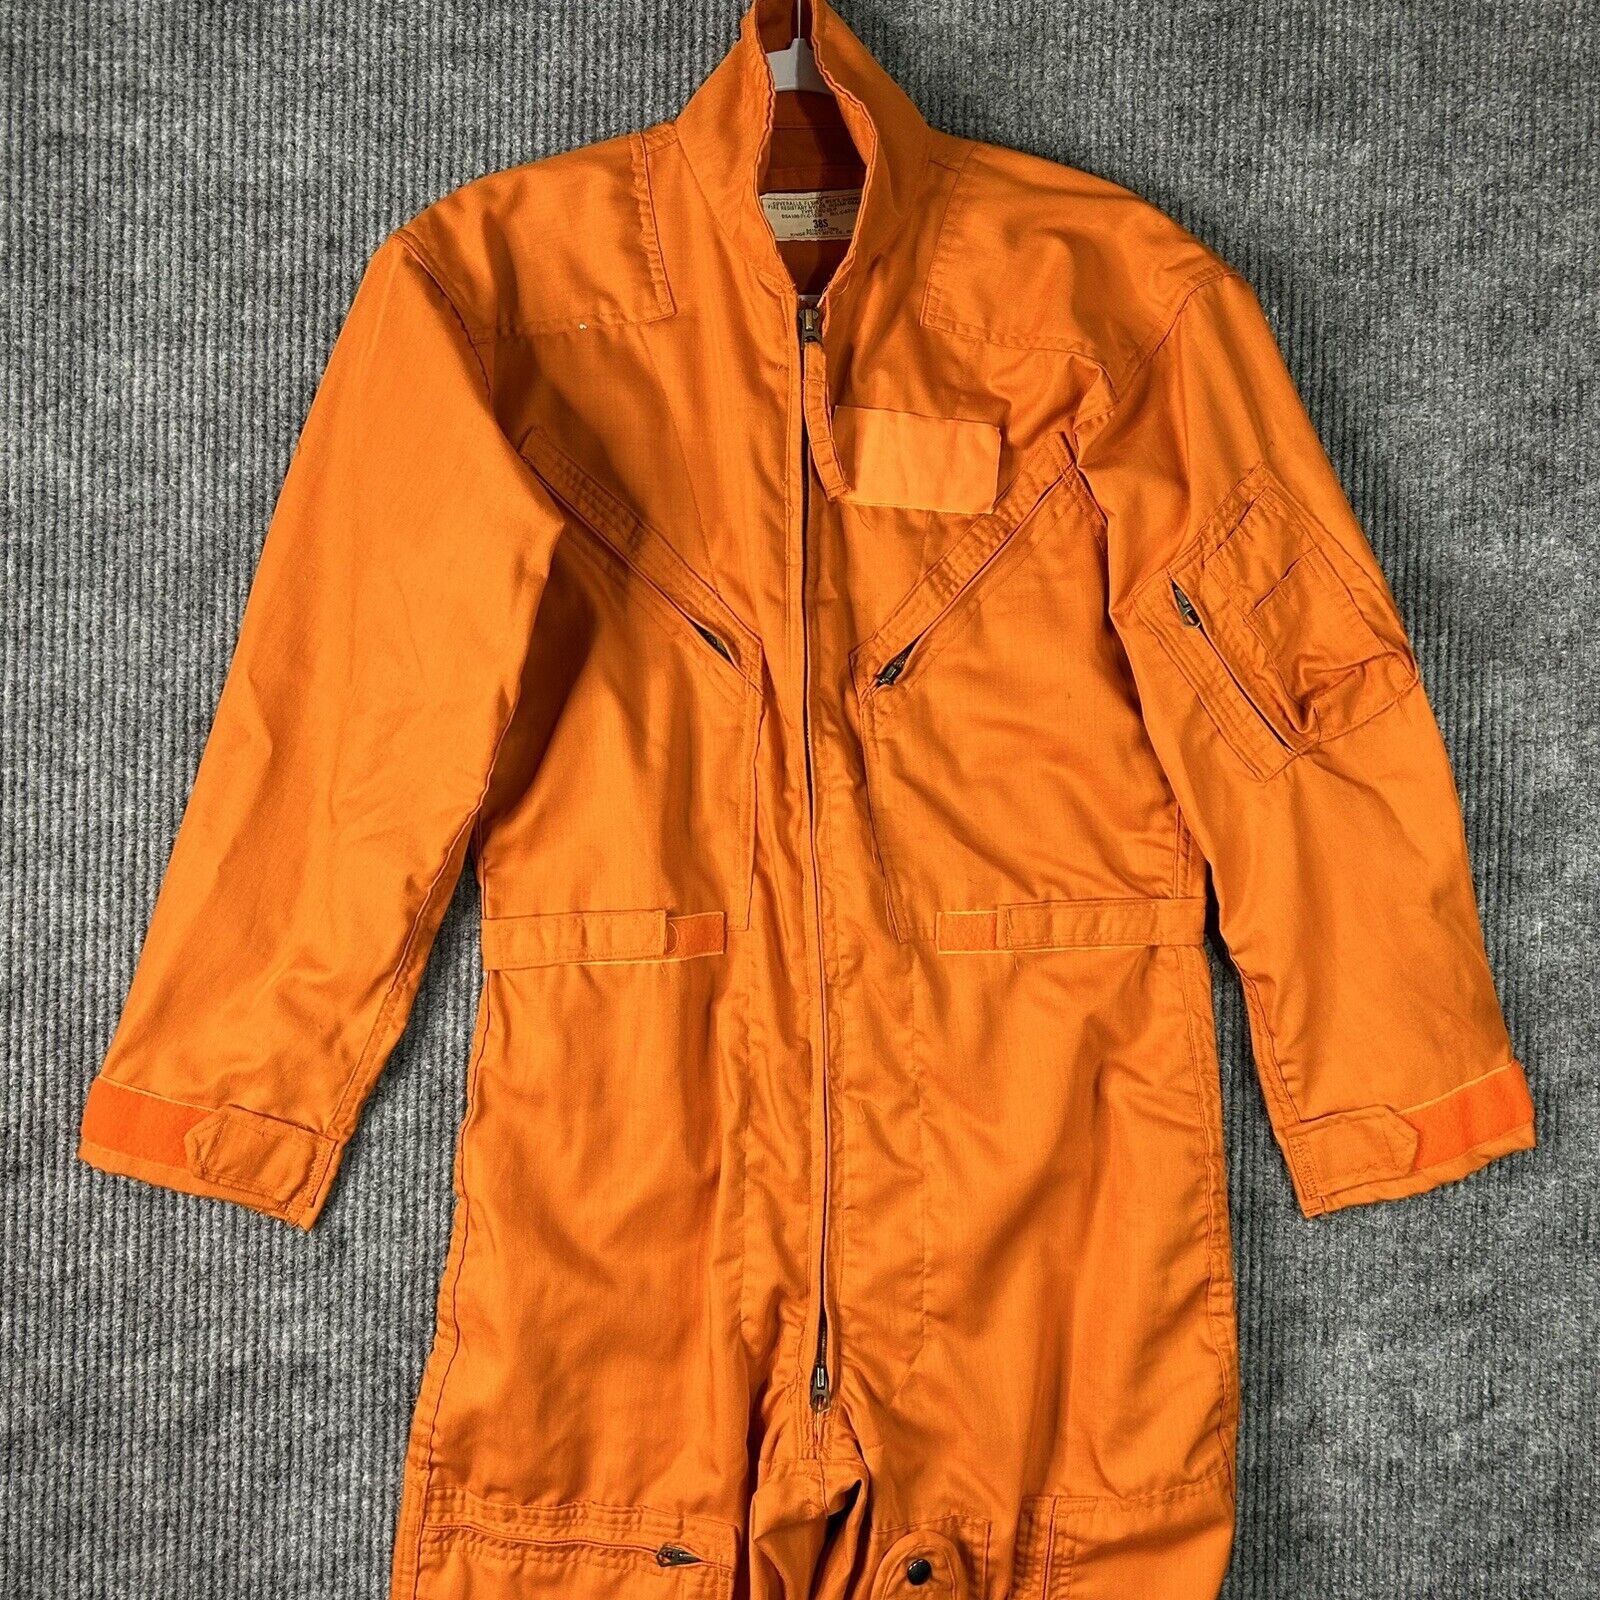 Vintage Flight Suit Flying Summer Coveralls CWU-28/P Indian Orange Size 38S